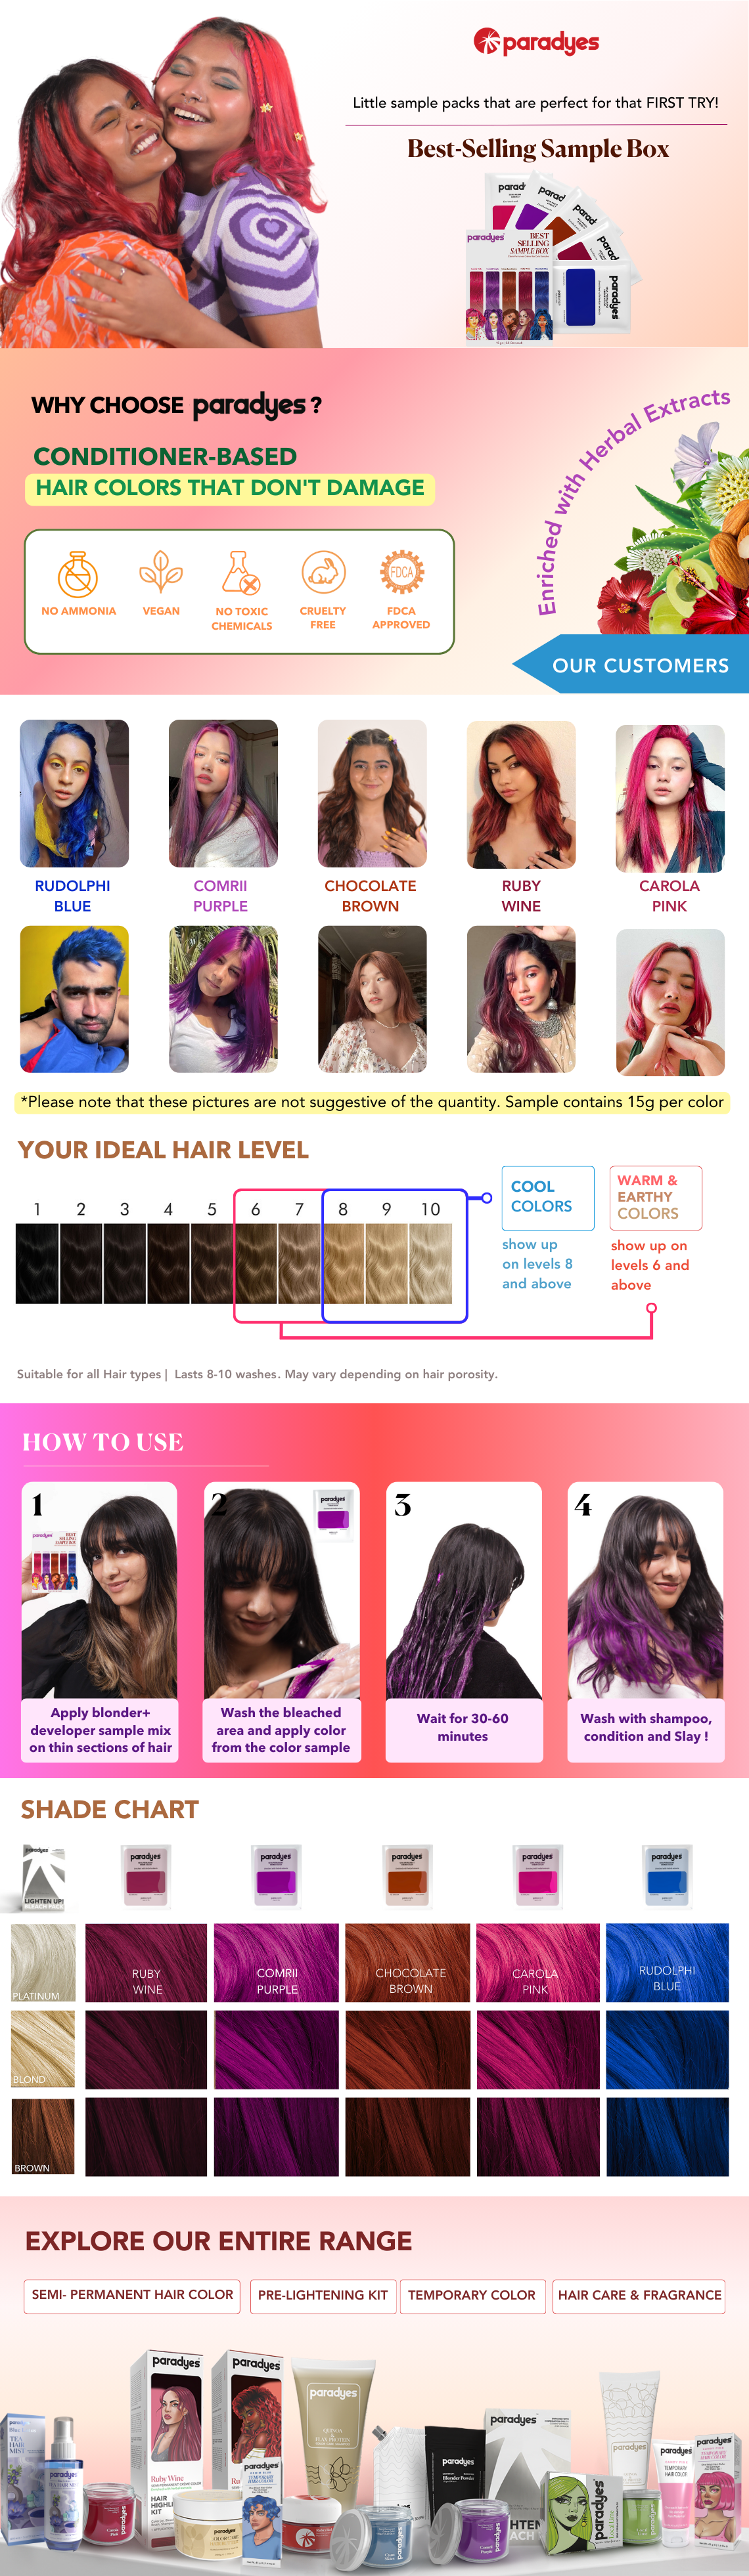 Lighten Up! Bleach Pack + Bestselling Hair Color Sample Box